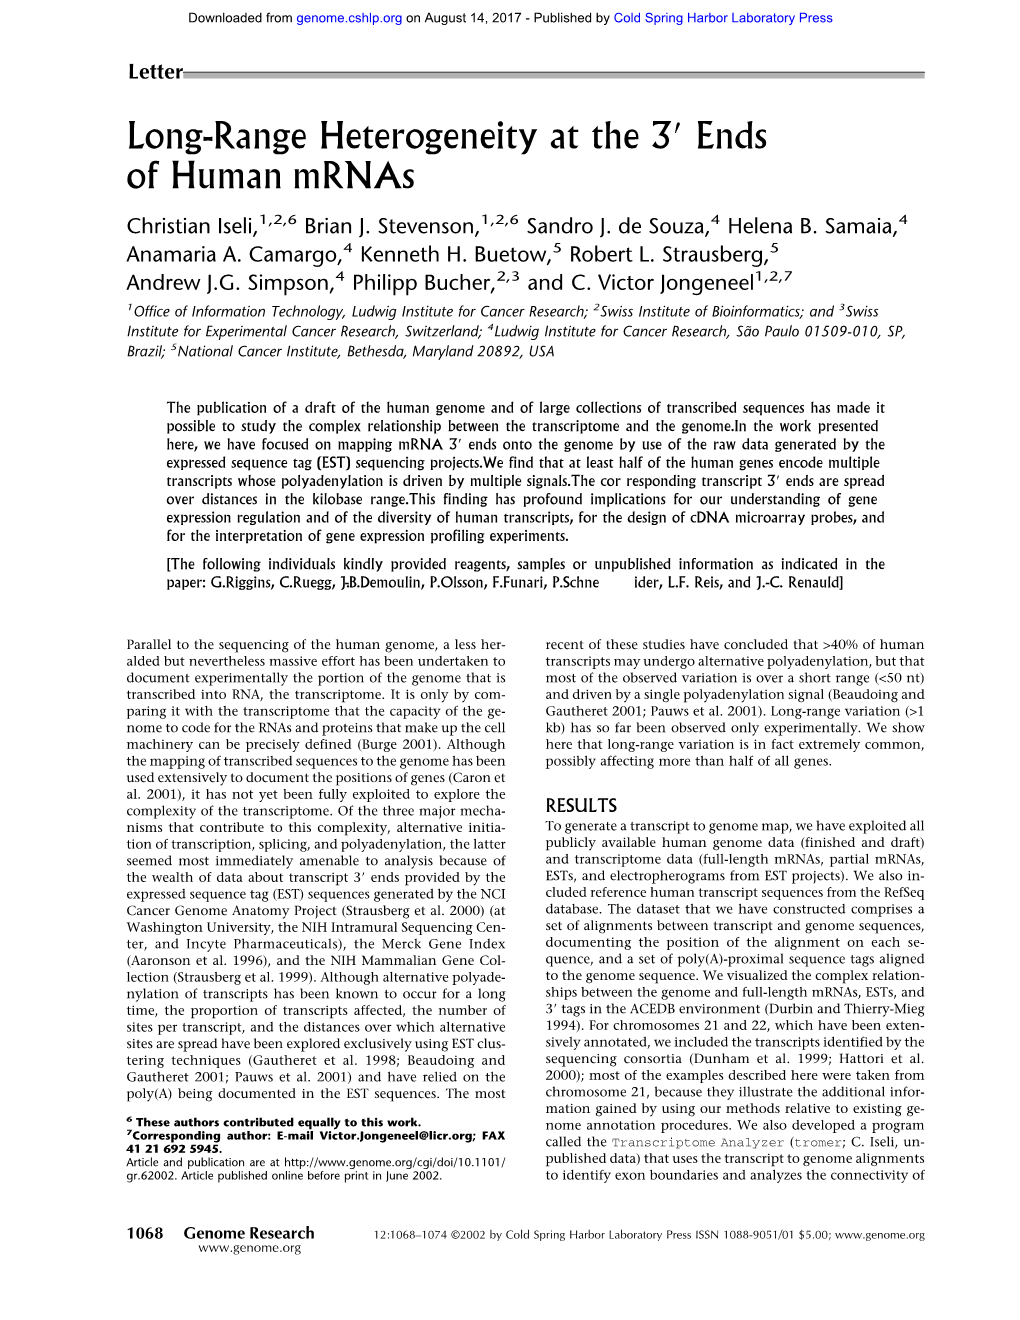 Long-Range Heterogeneity at the 3 Ends of Human Mrnas